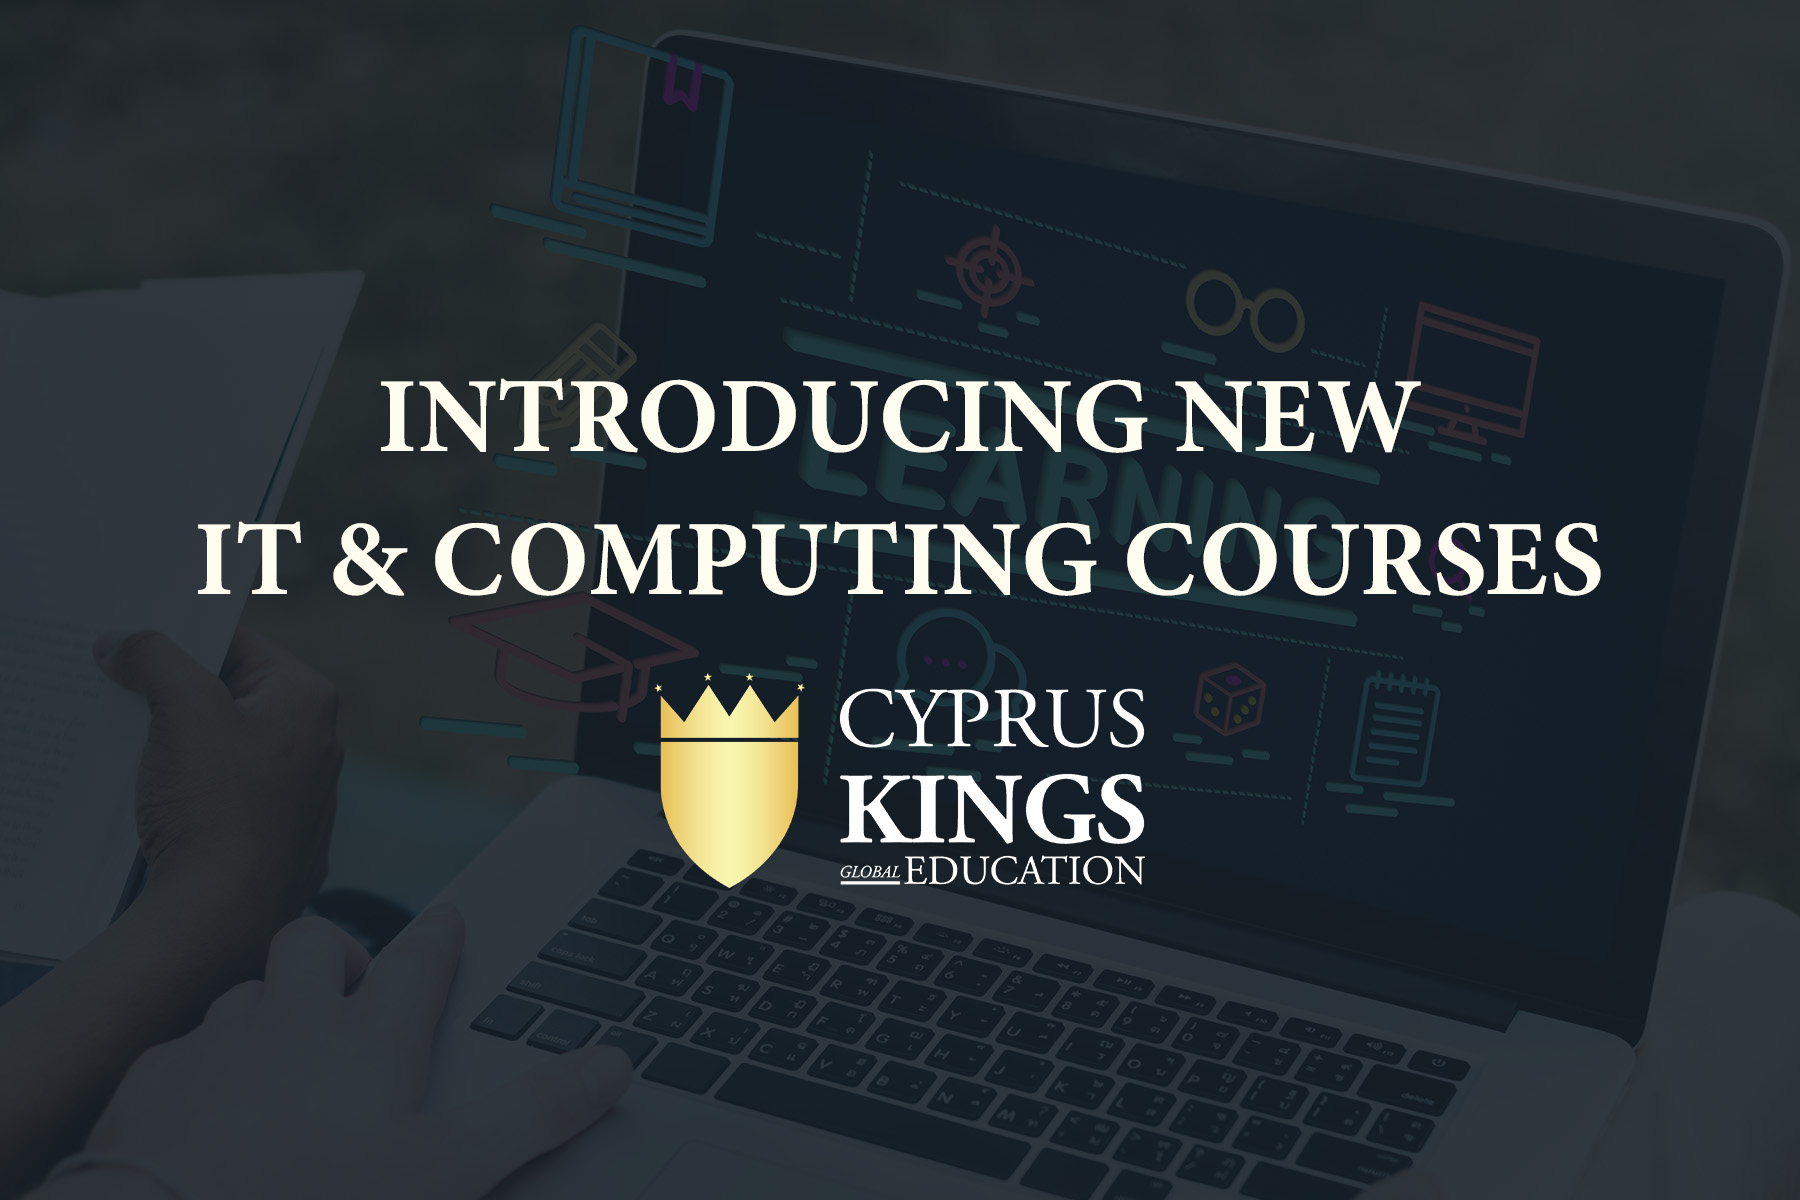 IT & Computing courses